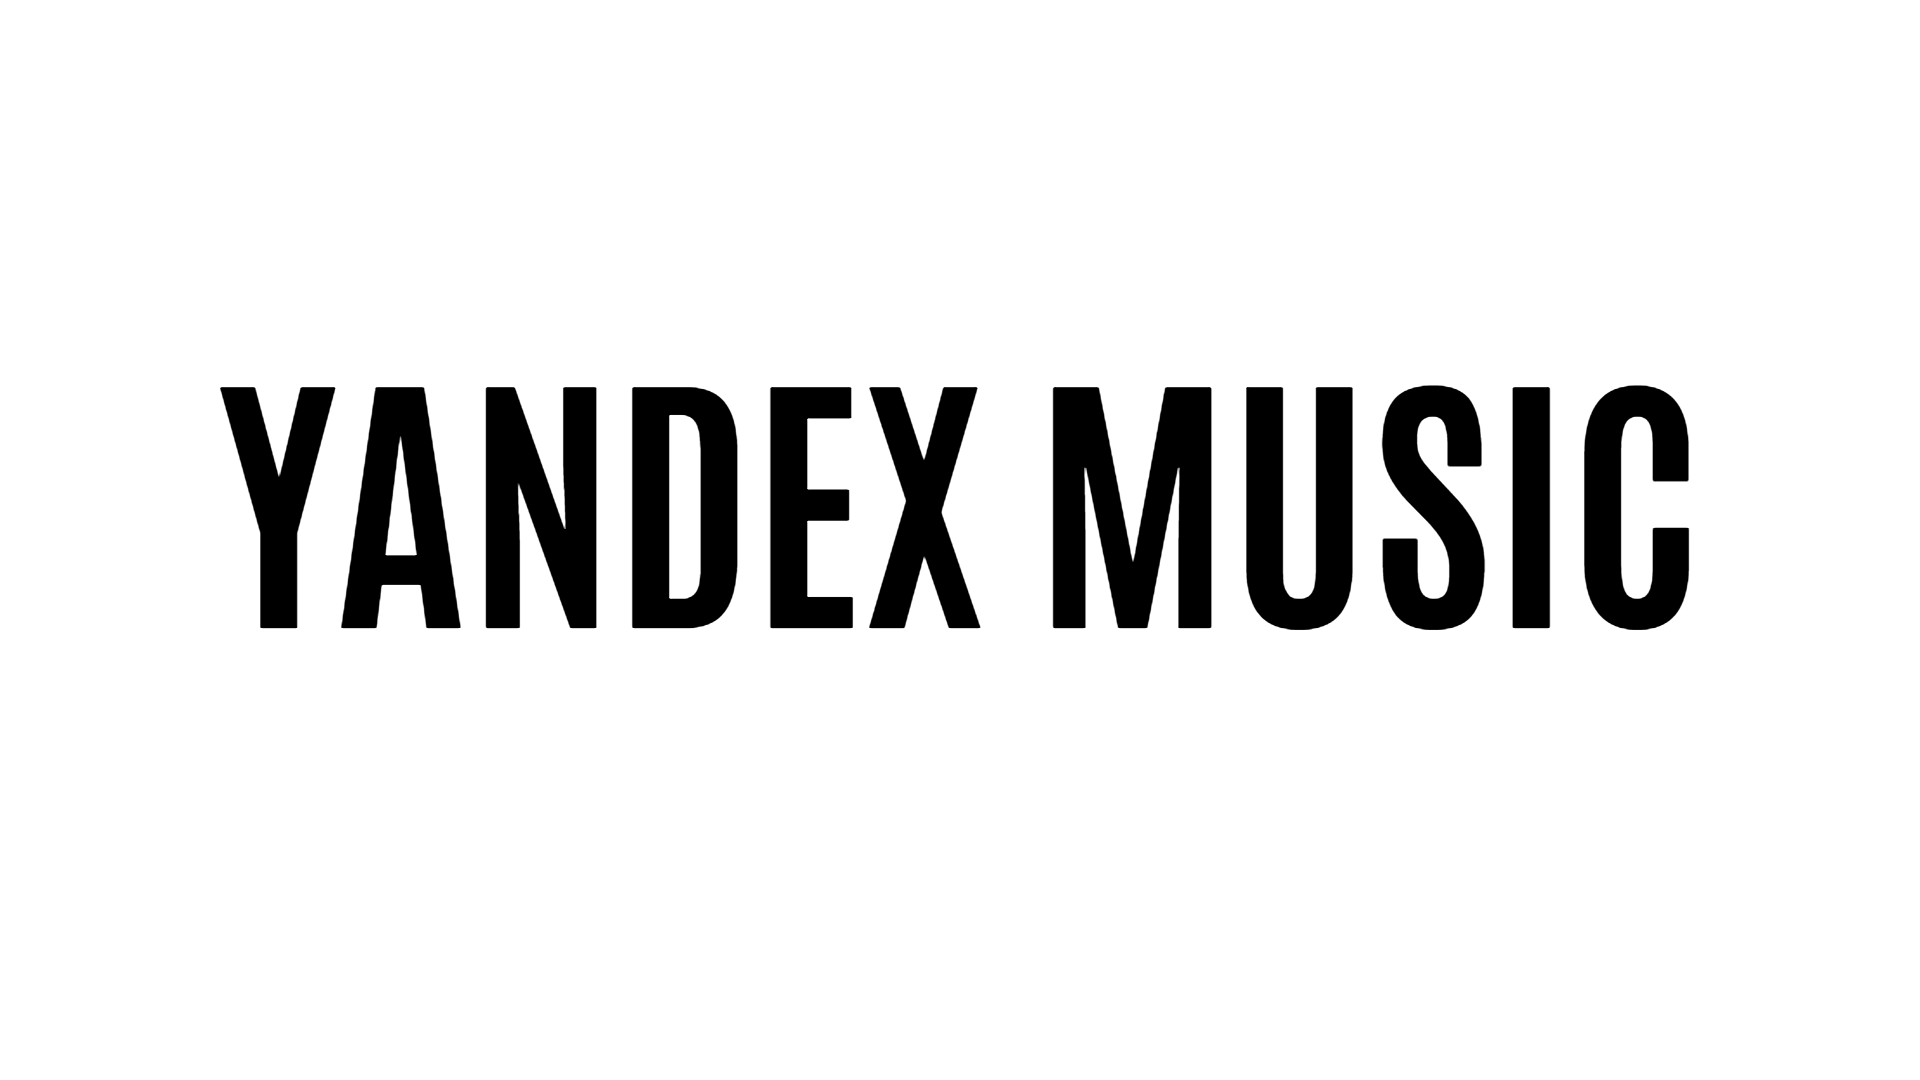 YANDEX MUSIC